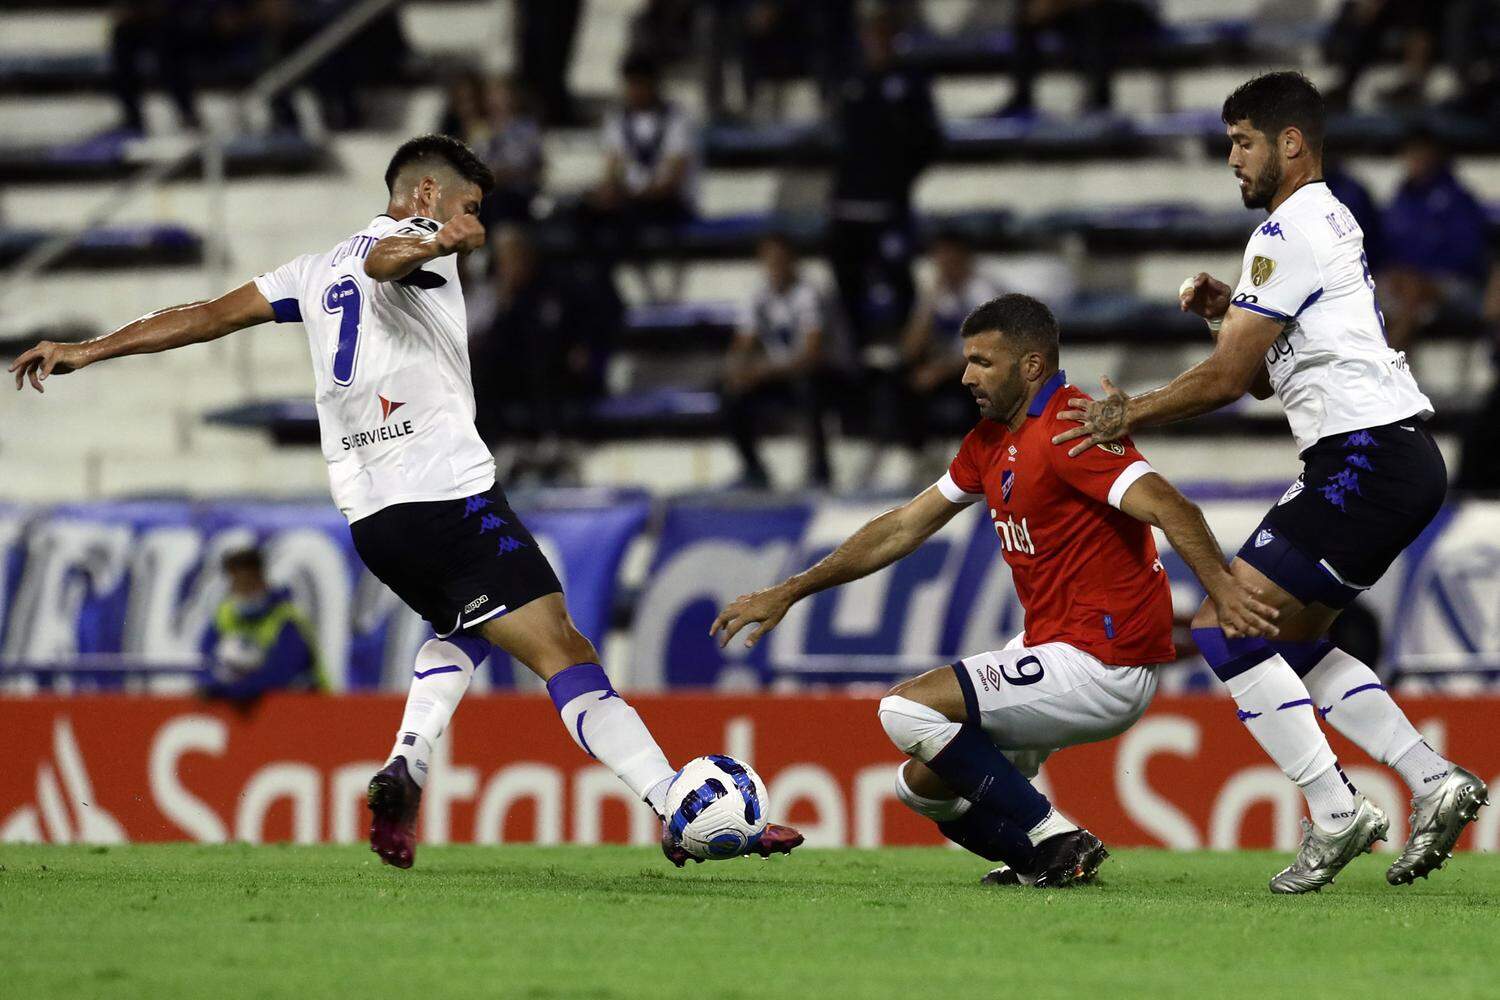 Tigre vs Vélez Sársfield: A Thrilling Encounter on the Football Pitch